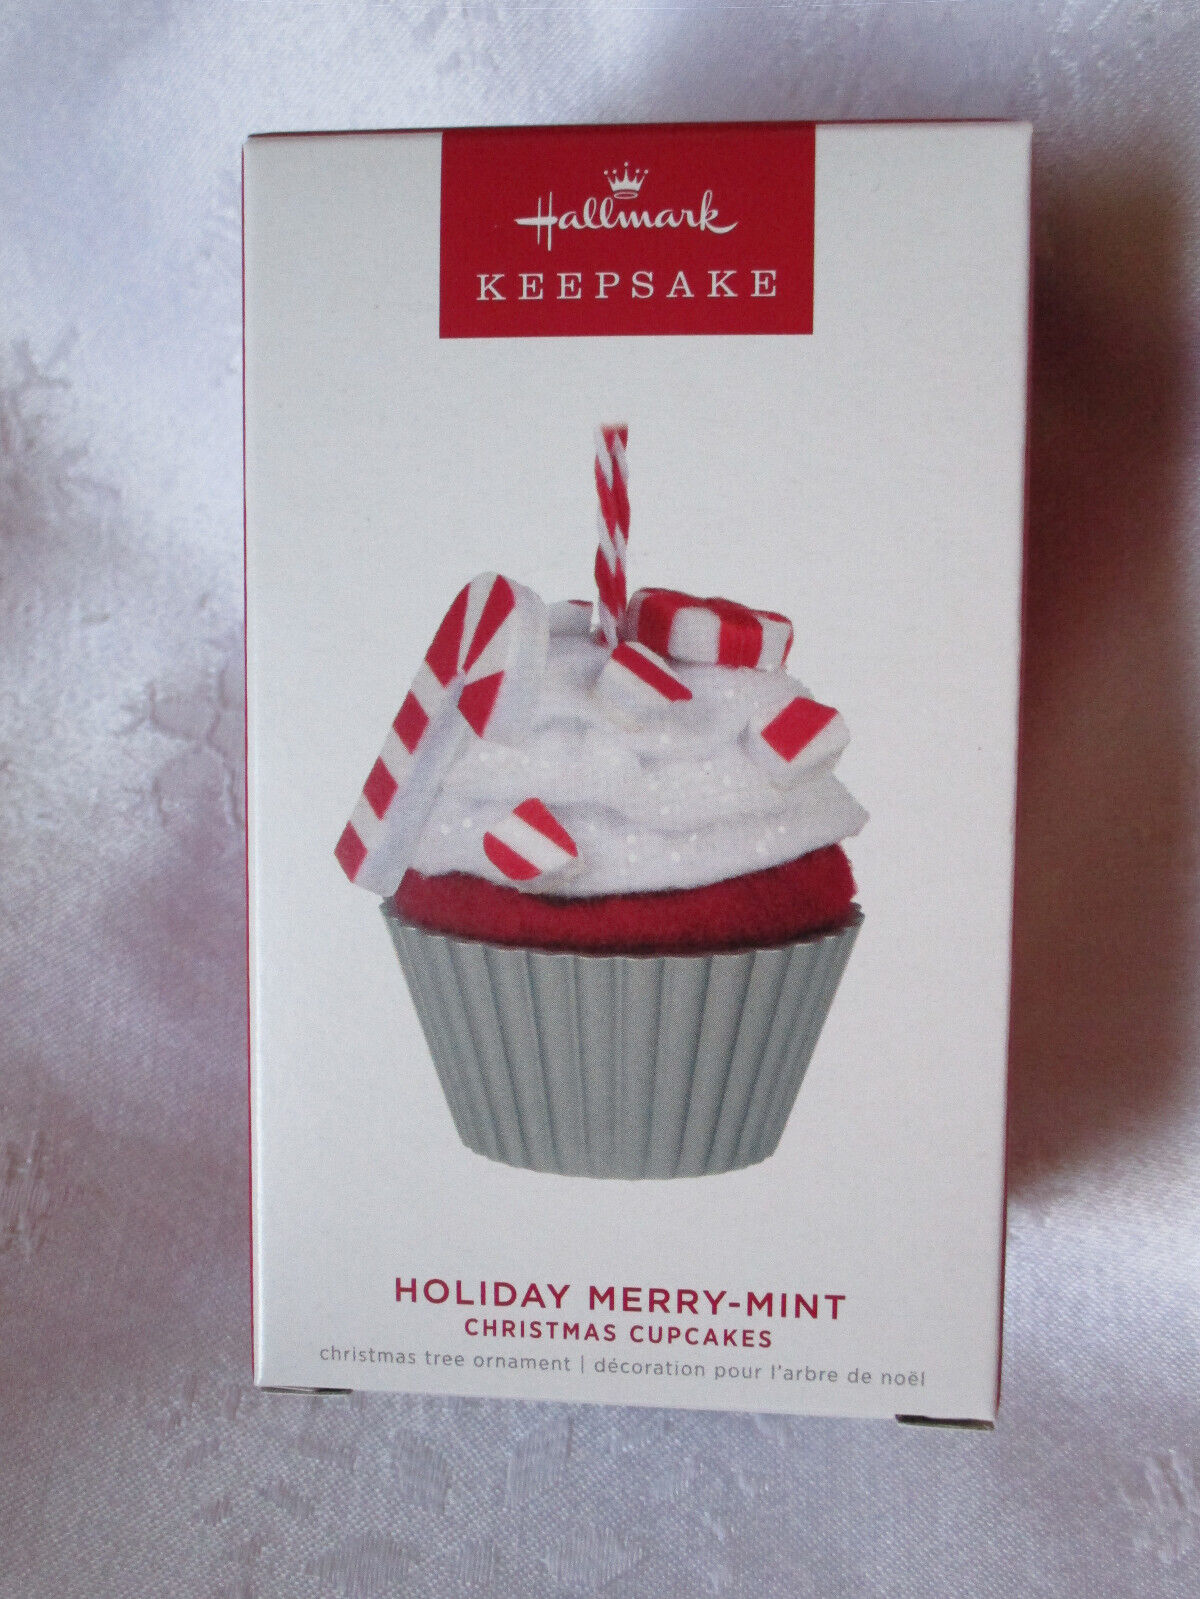 2022 Hallmark Ornament Christmas Cupcakes Holiday Merry-Mint 13th in series NIB